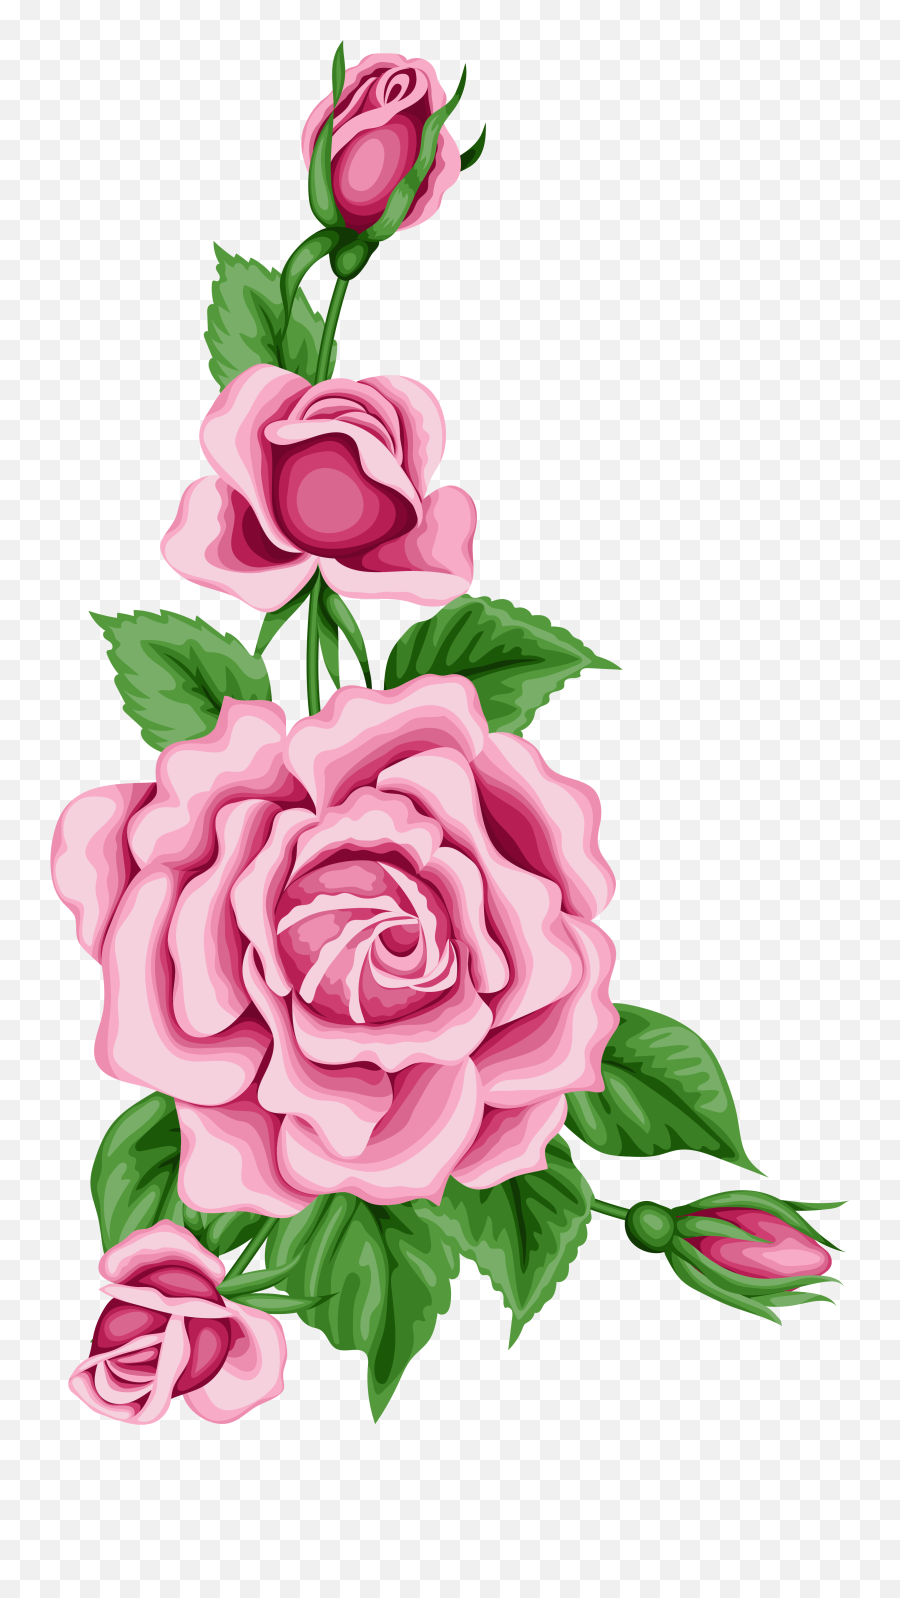 Roses Decoration Png Clipart Image Flower - Rose Flower Border Clipart,Decoration Png